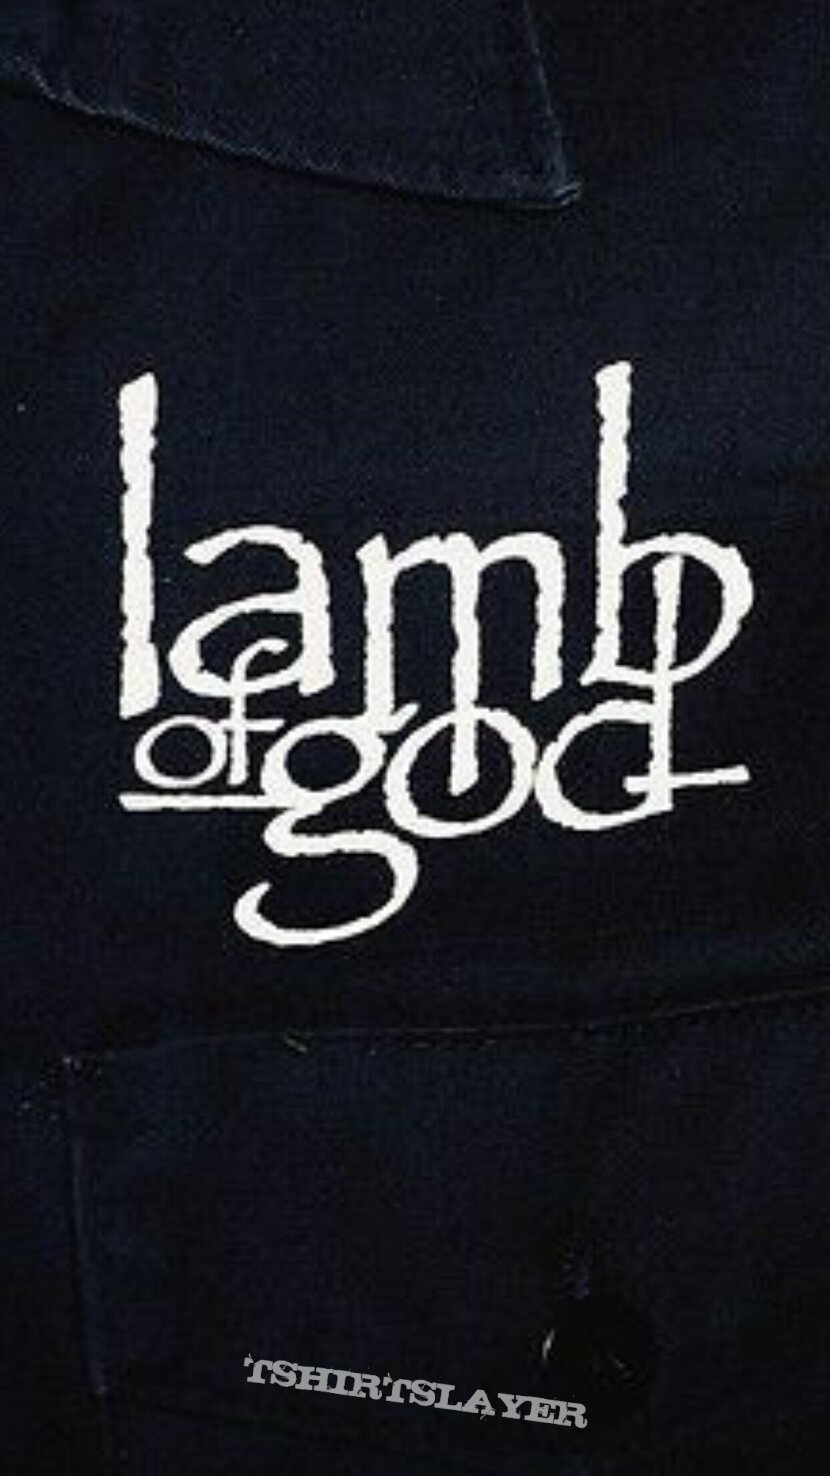 Lamb of God - New American Gospel - 2000 - Service Station Work Jacket